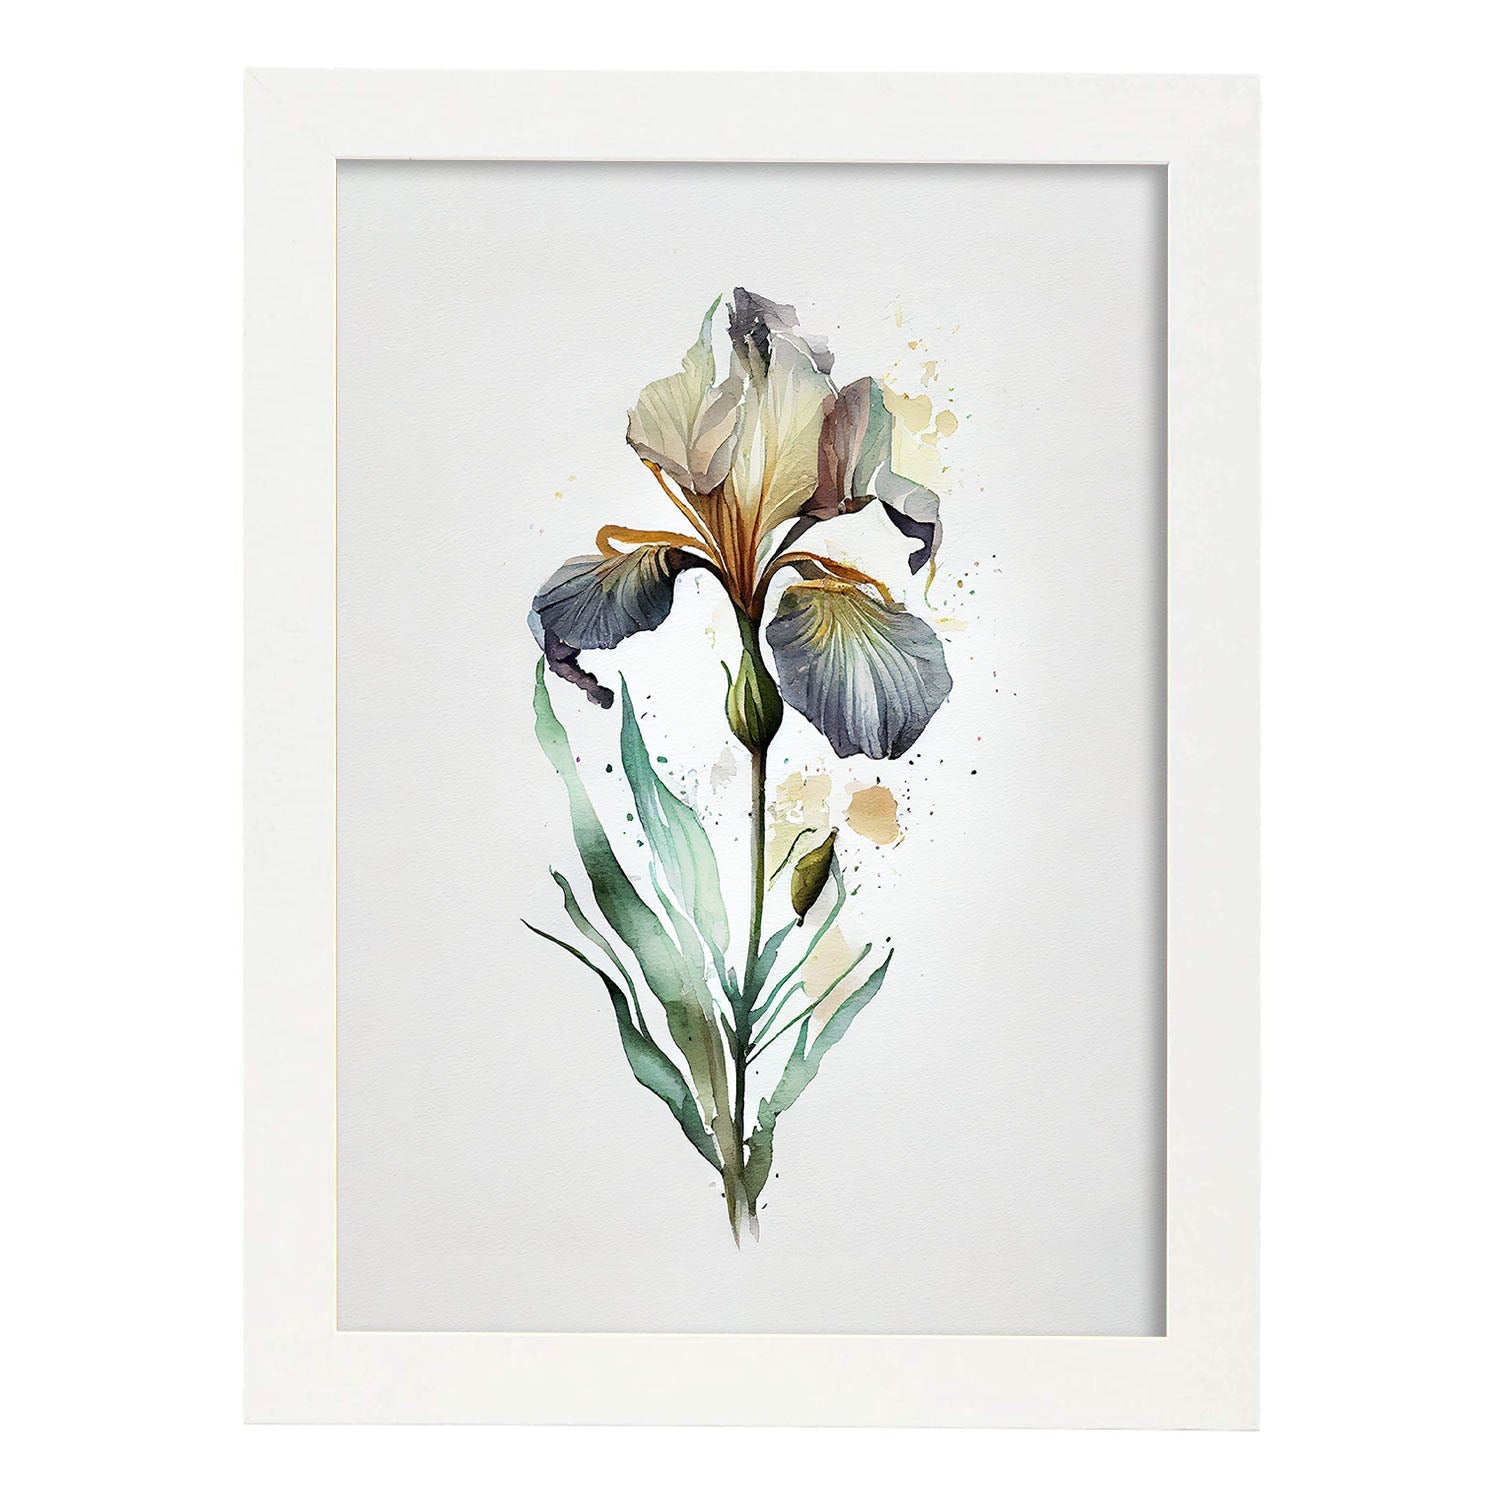 Nacnic watercolor minmal Iris. Aesthetic Wall Art Prints for Bedroom or Living Room Design.-Artwork-Nacnic-A4-Marco Blanco-Nacnic Estudio SL